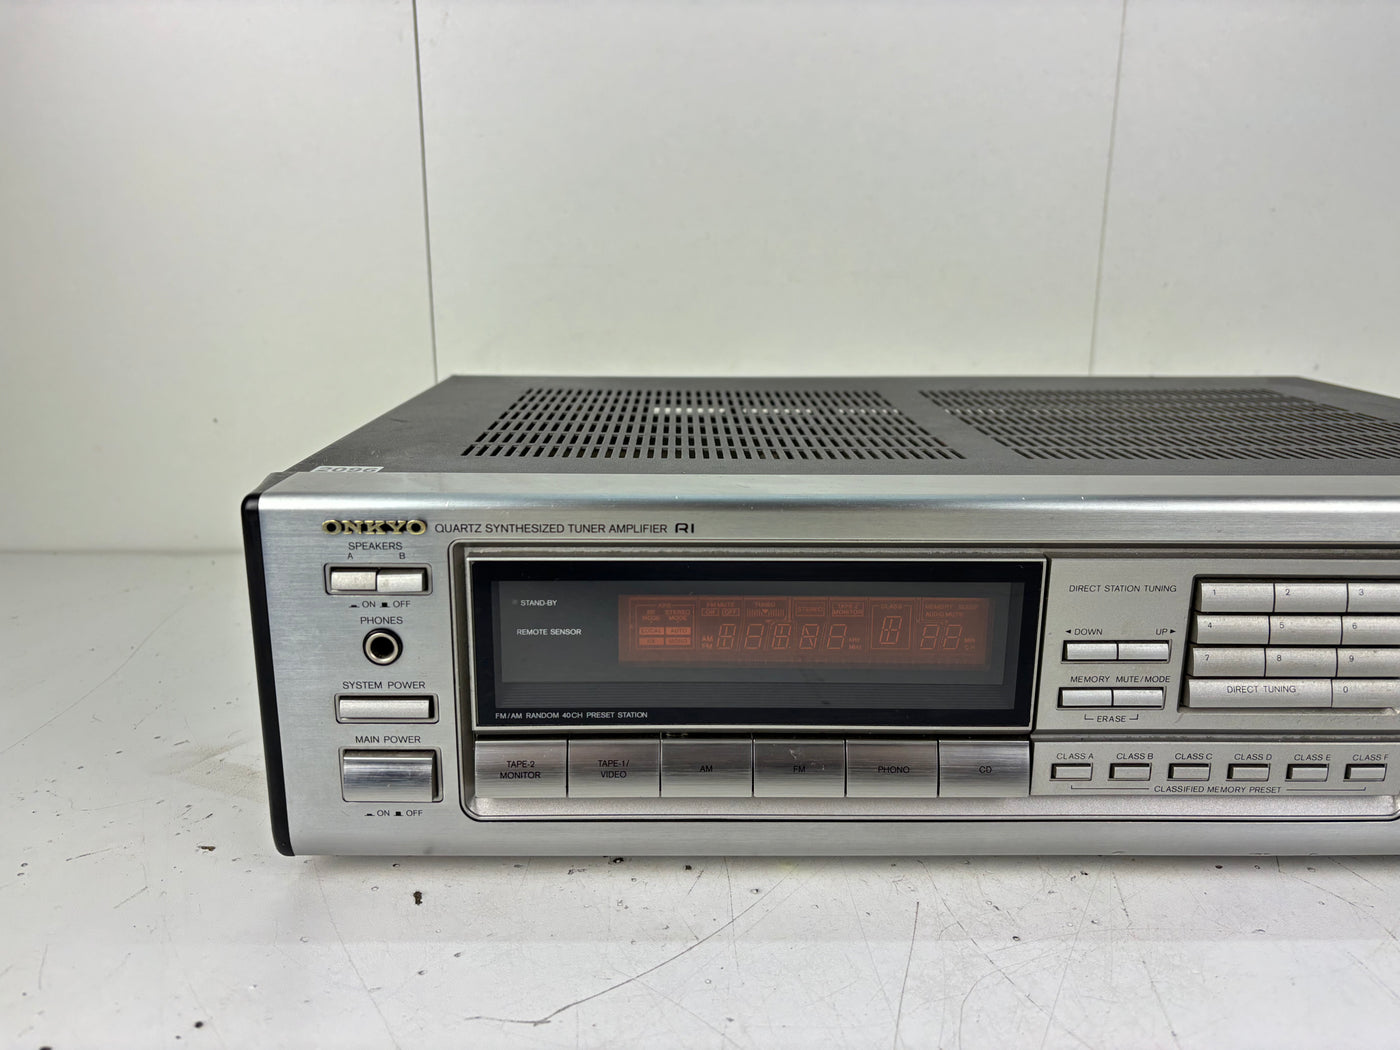 Onkyo TX-903 Stereo Tuner Amplifier